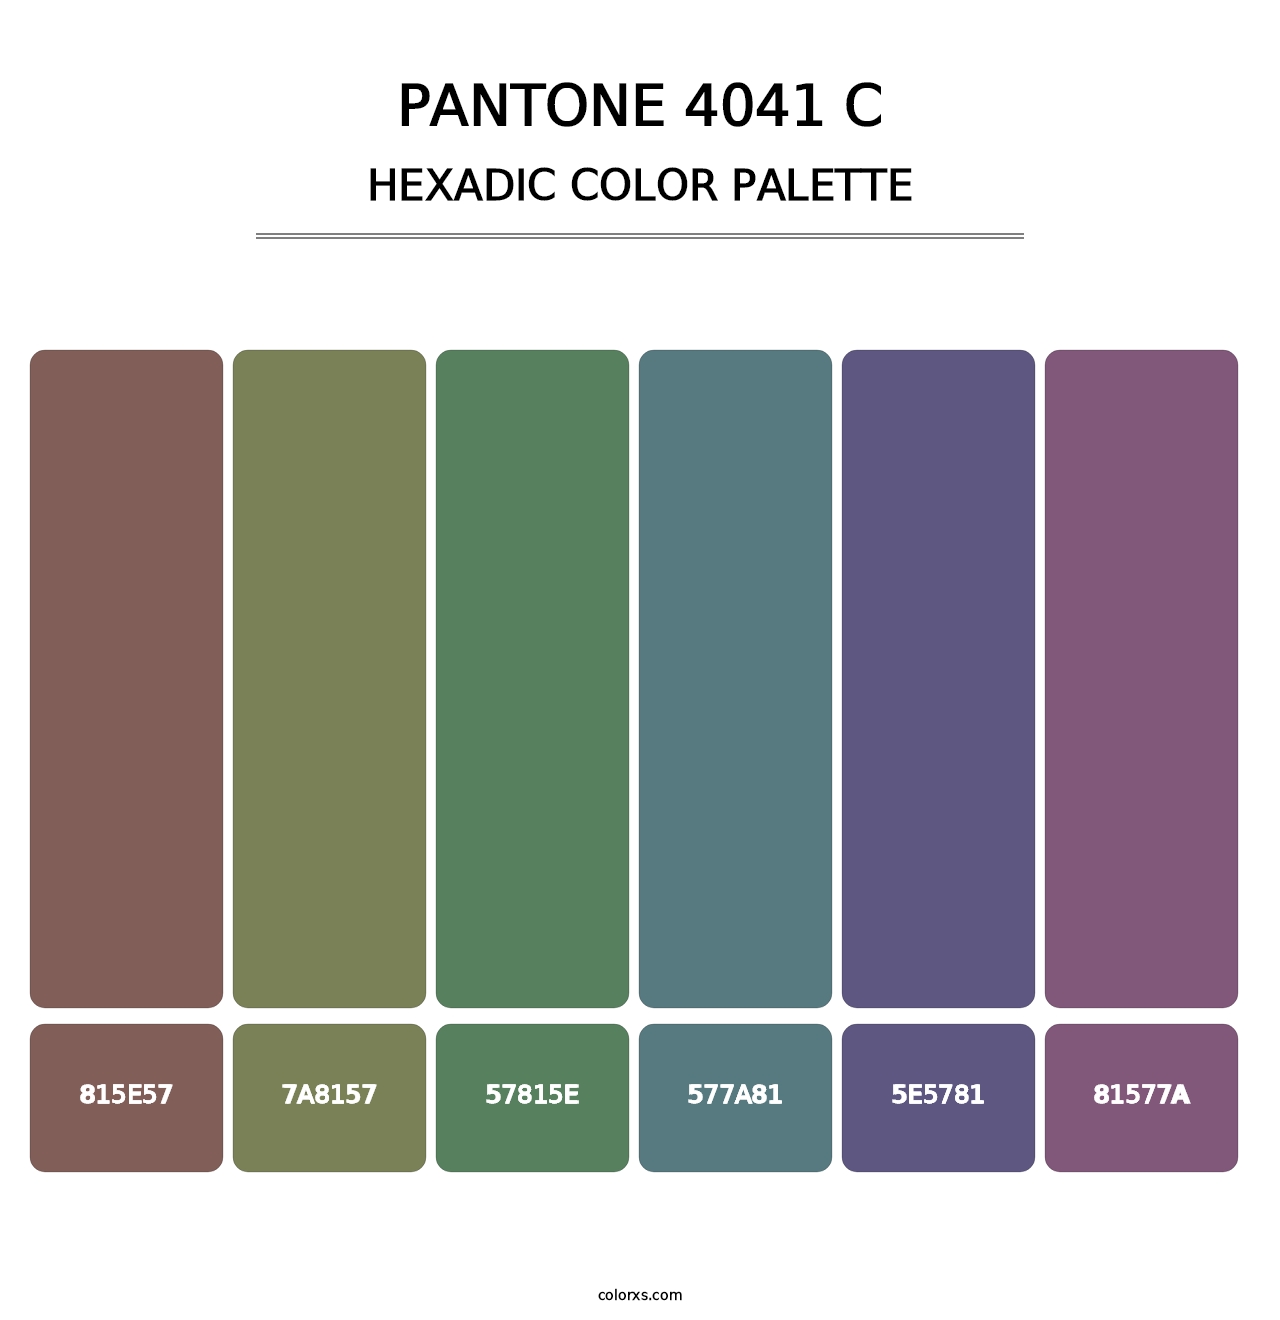 PANTONE 4041 C - Hexadic Color Palette